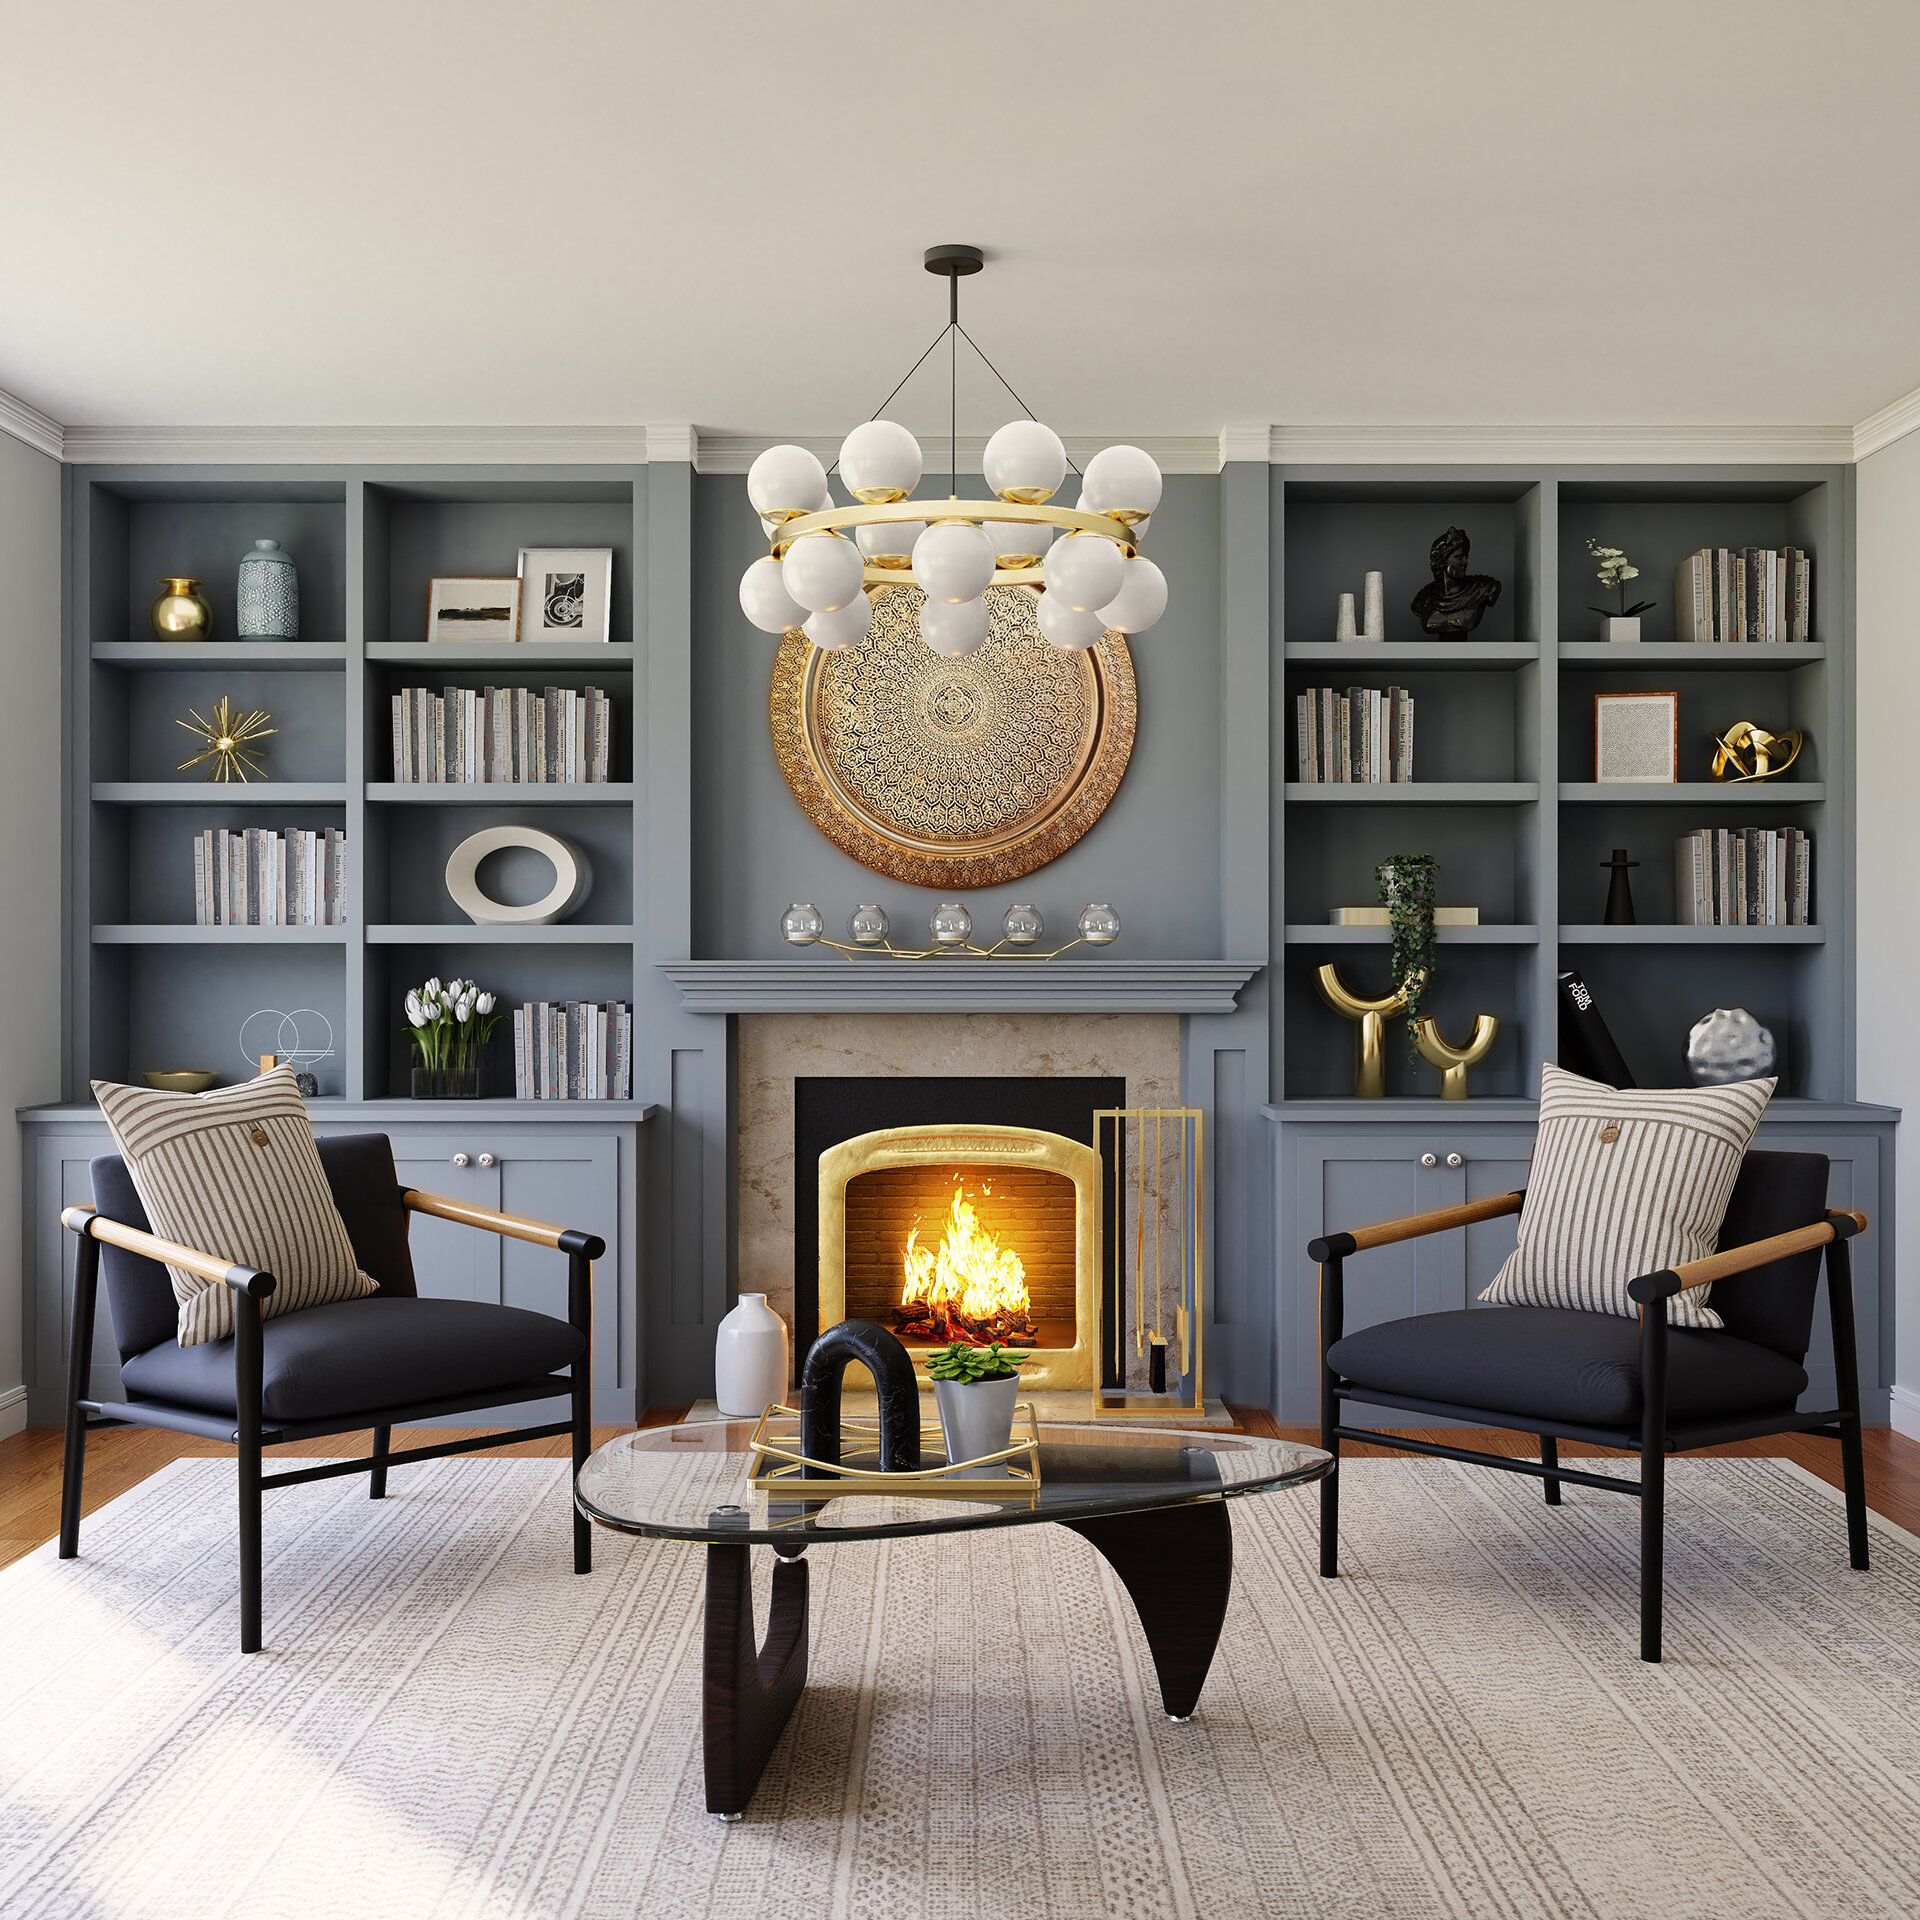 how-to-modernize-your-old-fireplace-tile-kathleen-jennison-interior-design-lodi-california.jpg